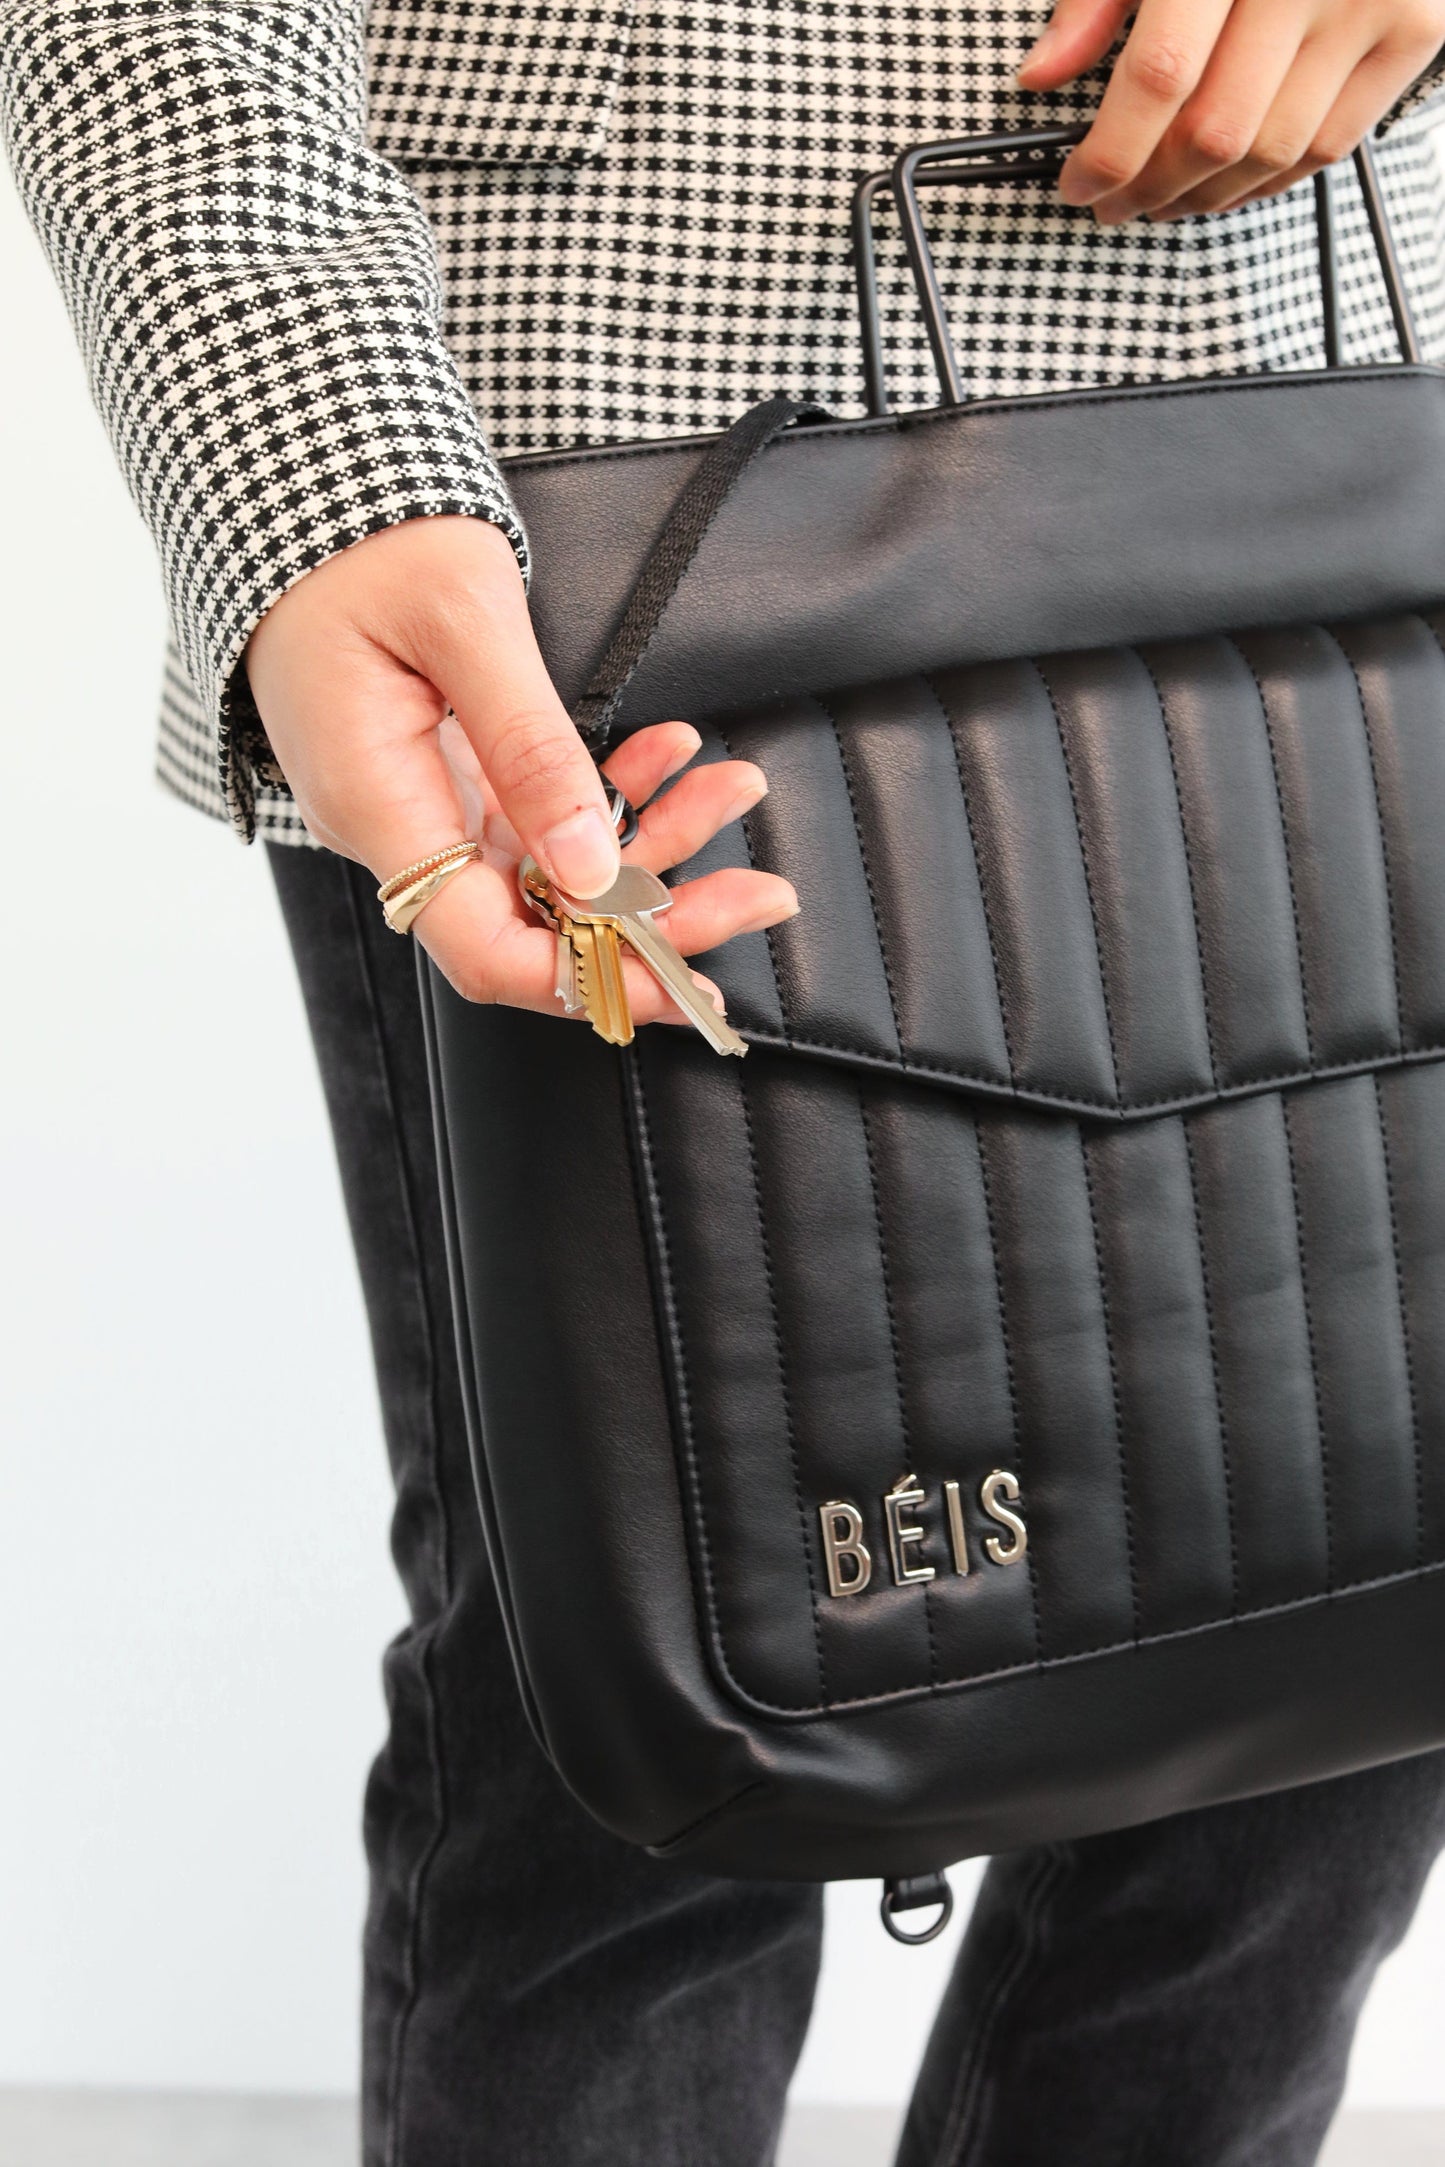 BEIS Messenger Backpack Ket Leahs detail